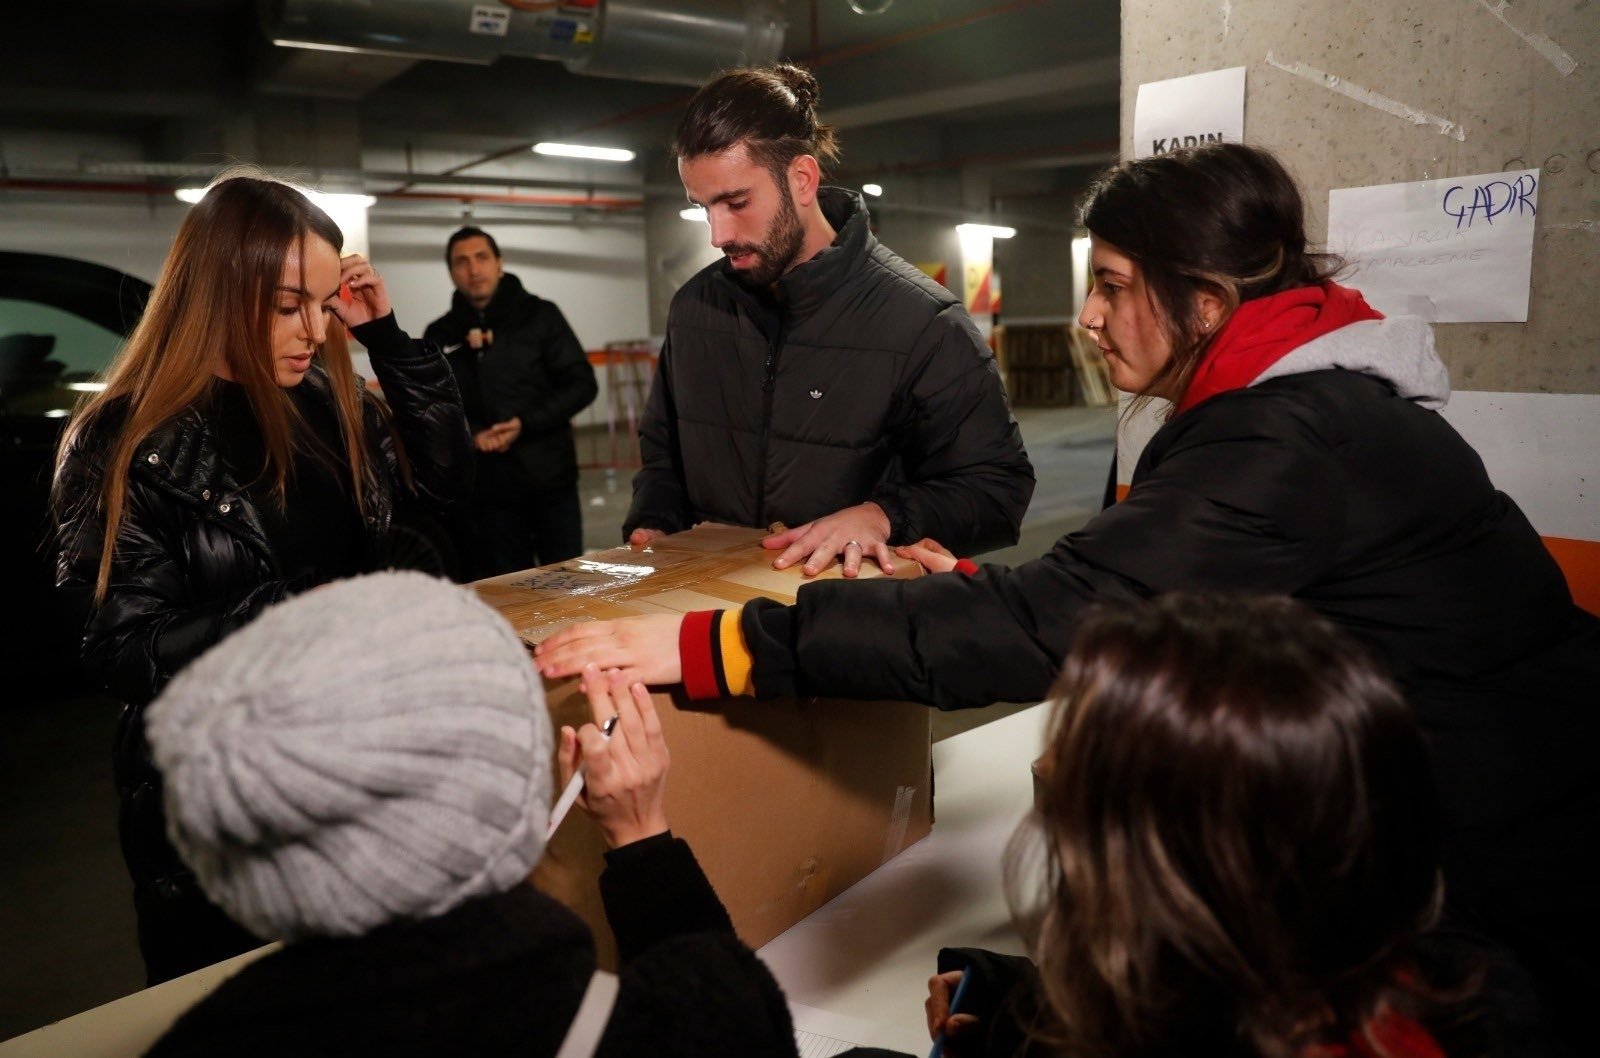 Sergio Oliveira dari Galatasaray (tengah) dan istrinya membantu relawan penyebab gempa Kahramanmaraş di Stadion Nef, Istanbul, 9 Februari 2023. (Foto IHA)